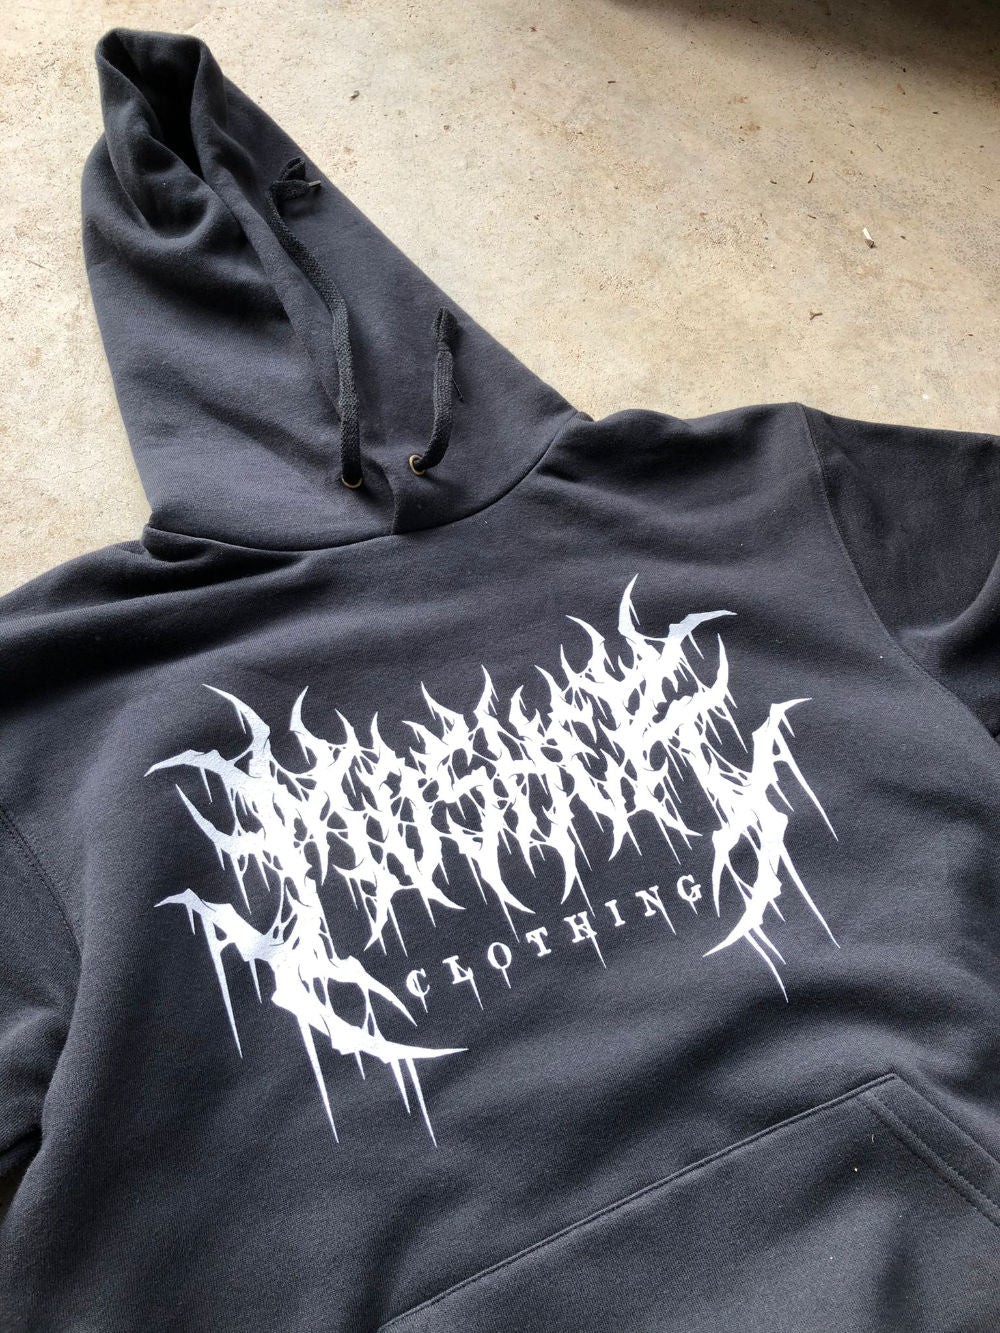 Brutal Zombies Pentagram hoodie (front) by Mosher Clothing